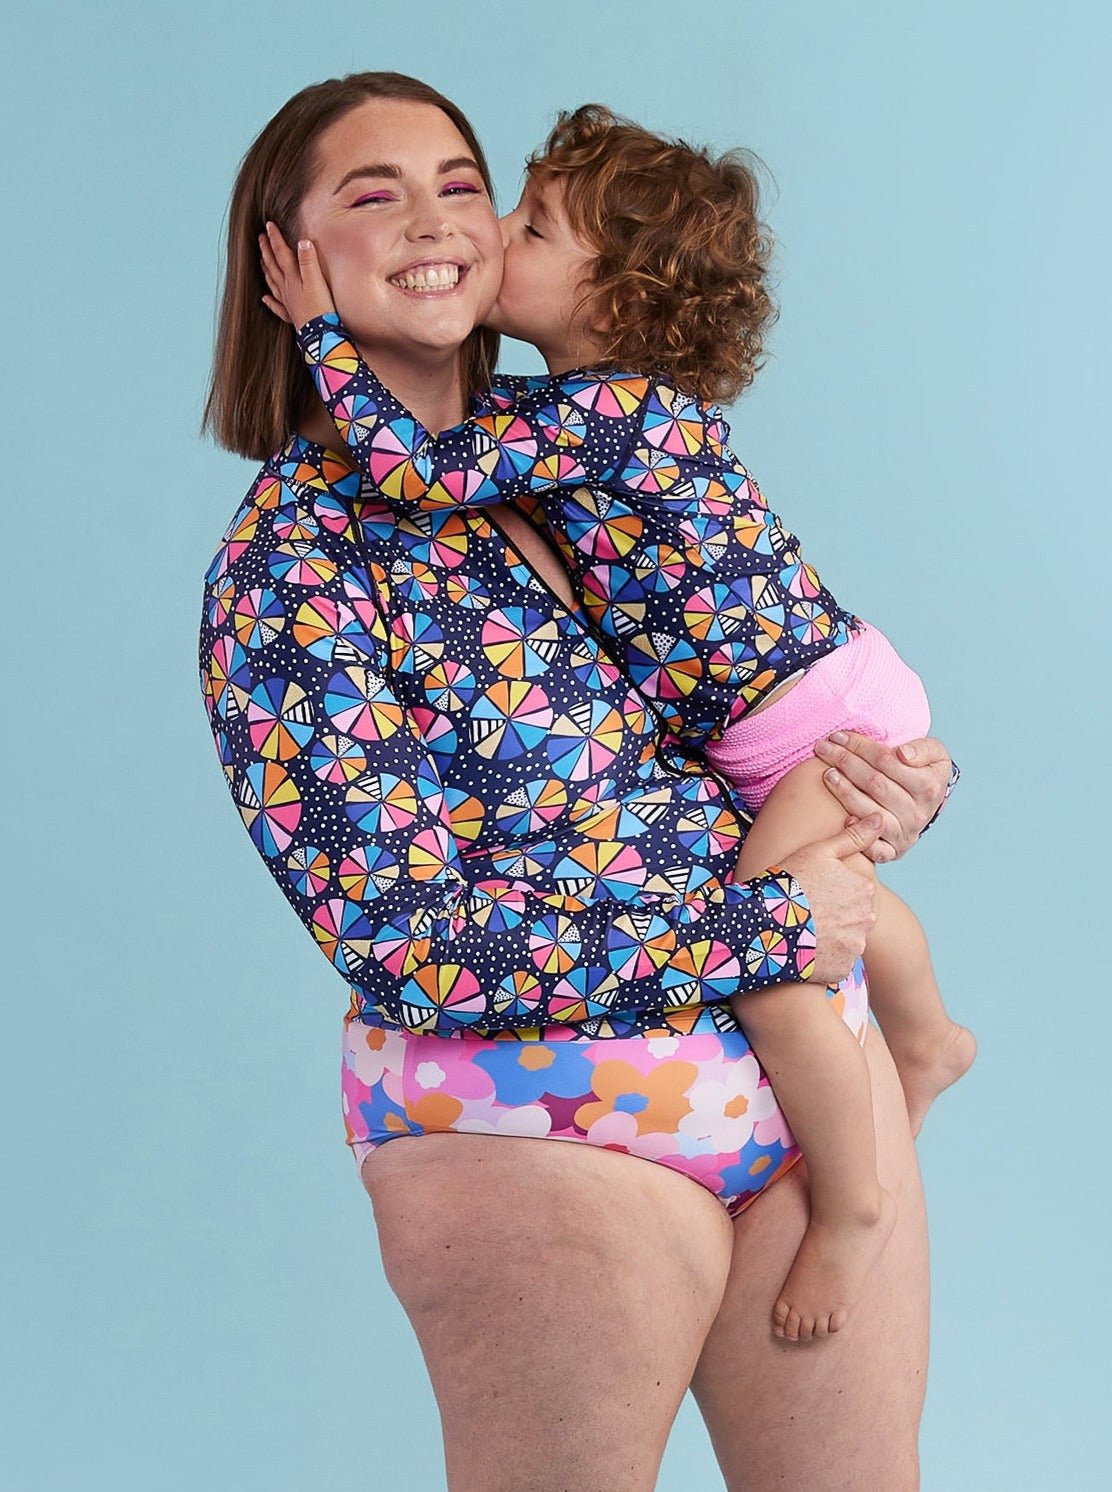 Colour Wheel Long-Sleeved Full Length Rashie Top - matching family swimwear